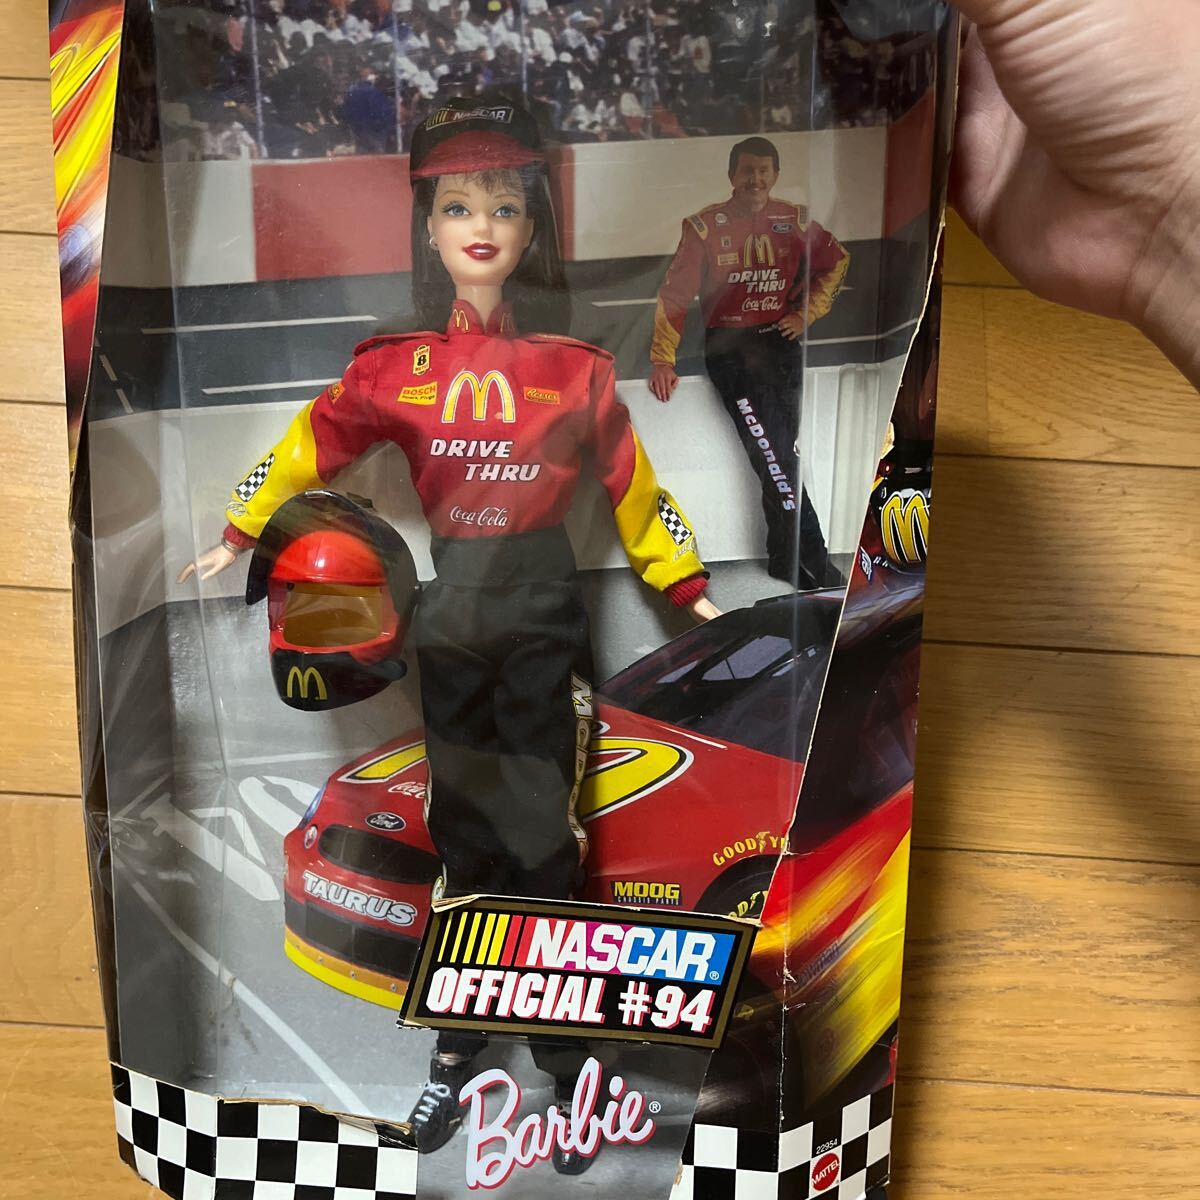 Barbie NASCAR Official #94 (マクドナルドのレーシングスーツ姿のバービー) 並行輸入品の画像1